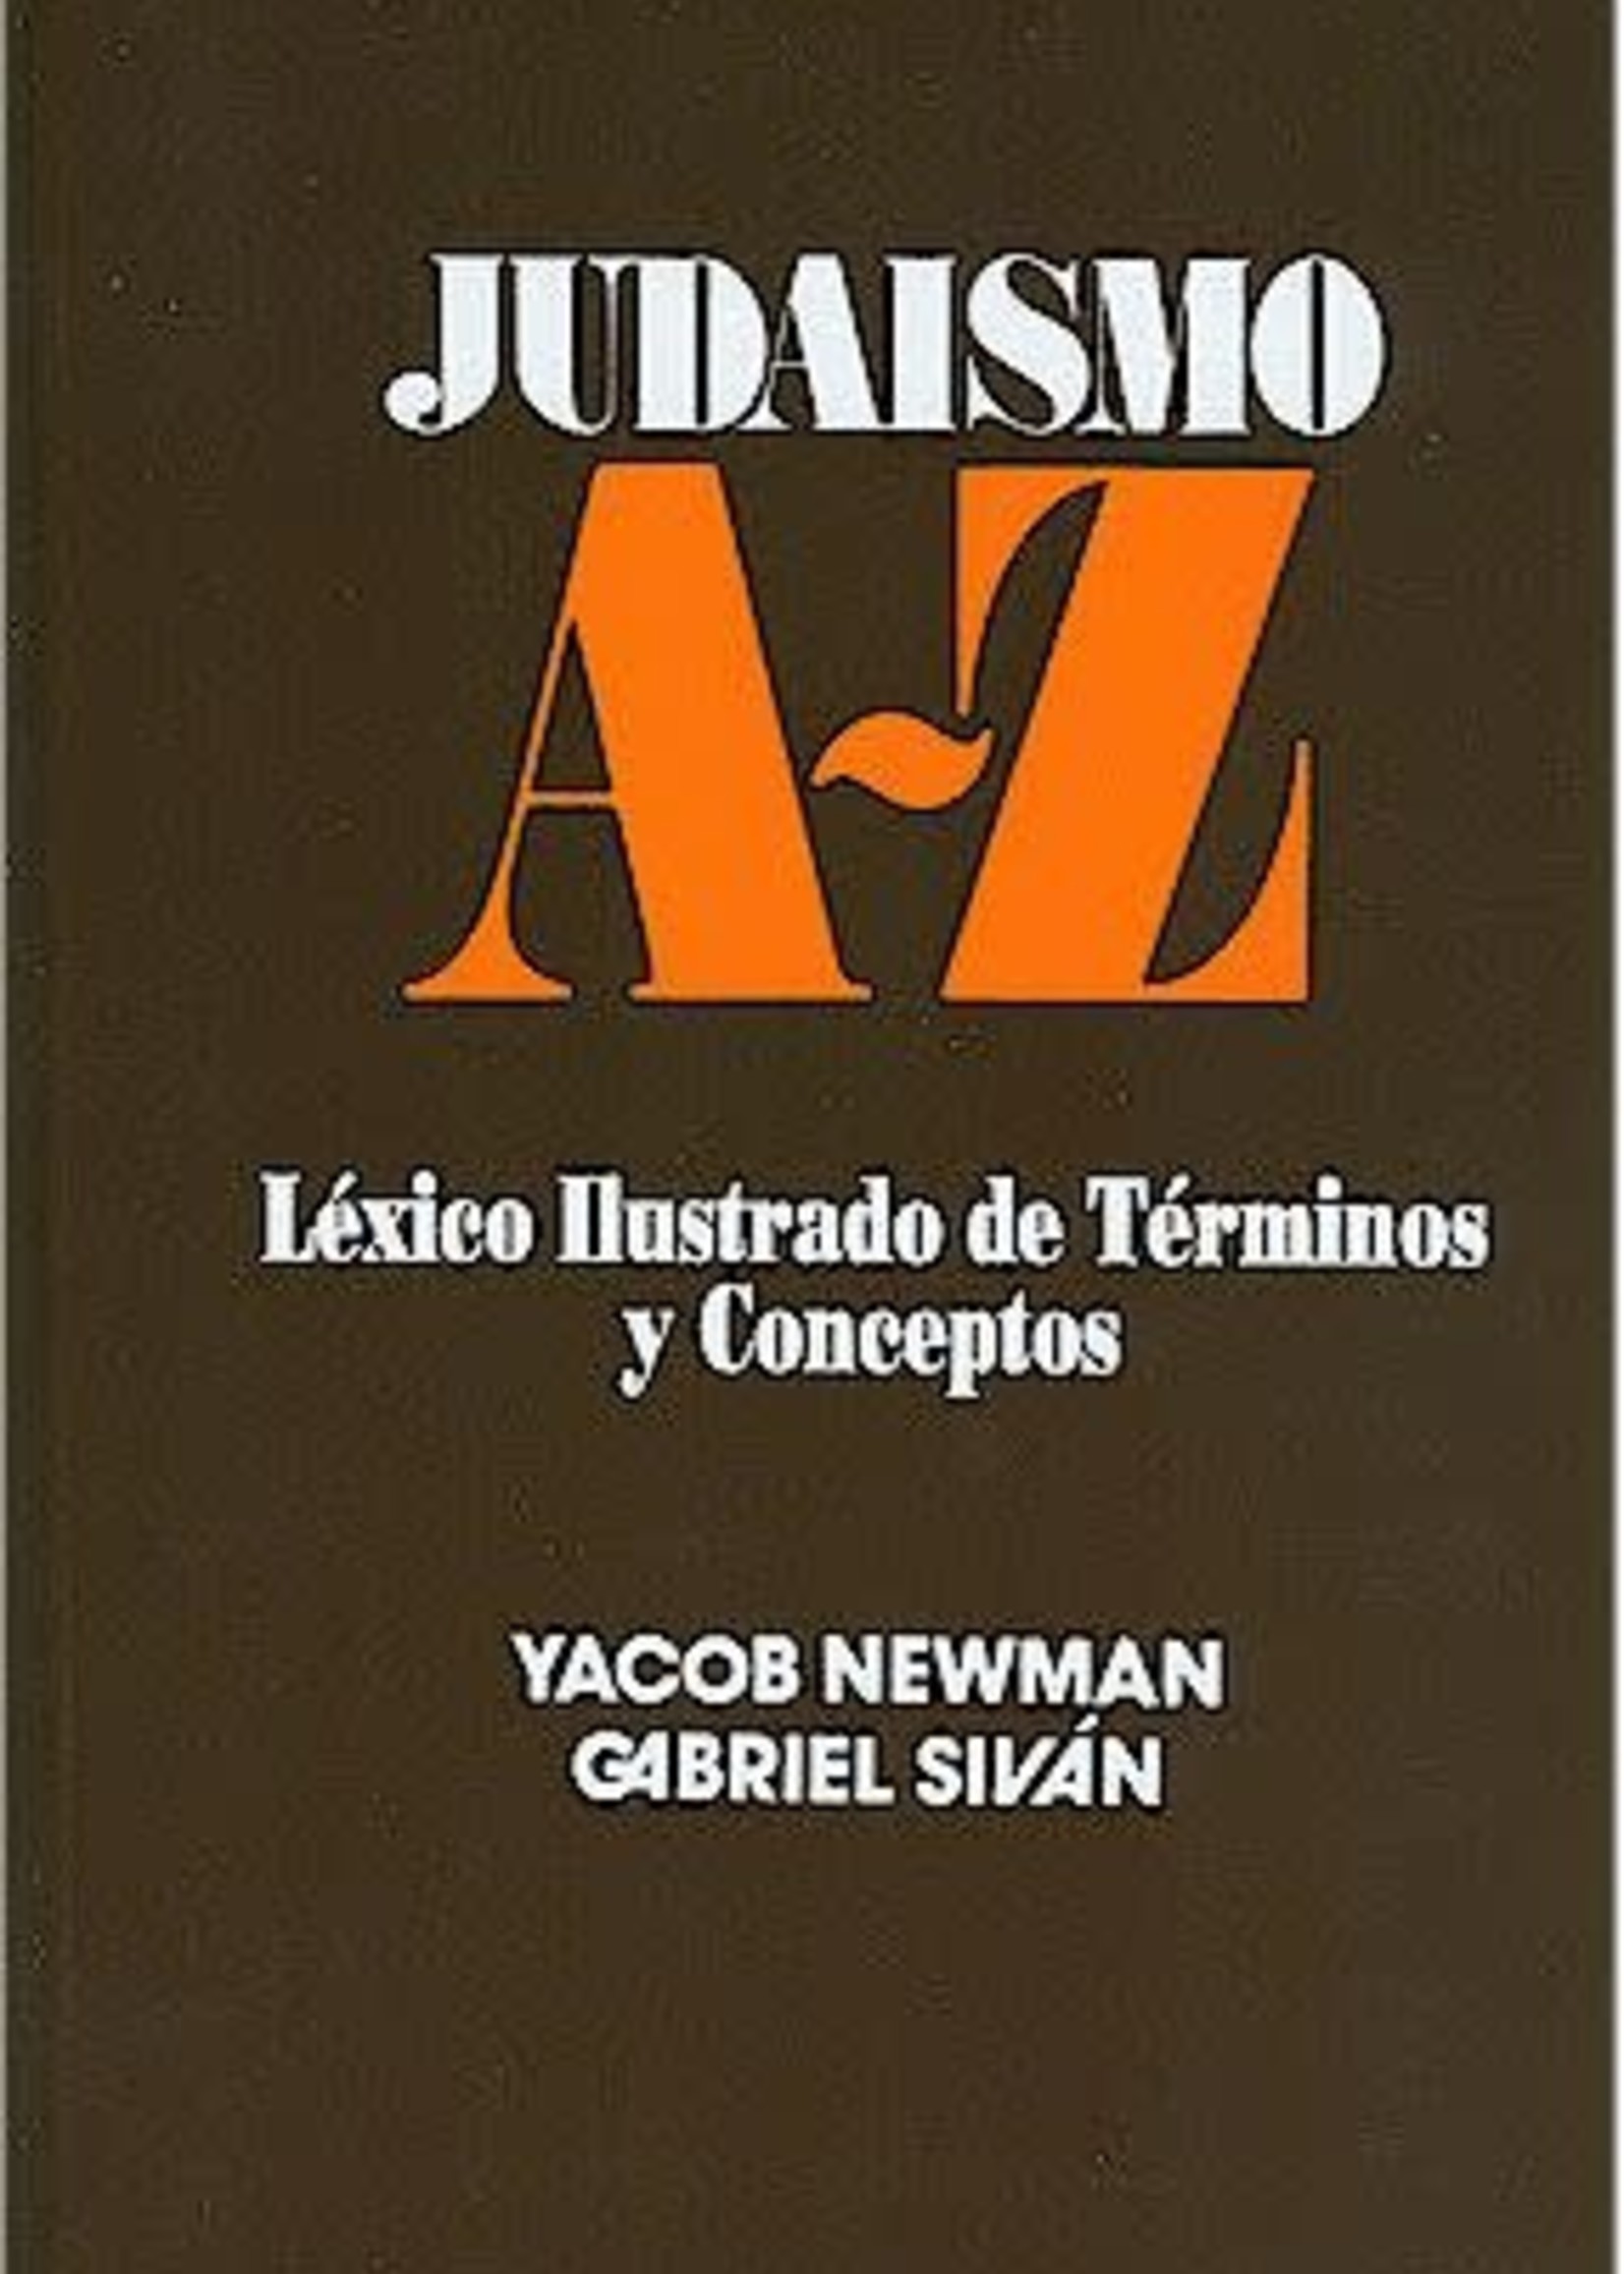 Judaismo A-Z (Spanish)